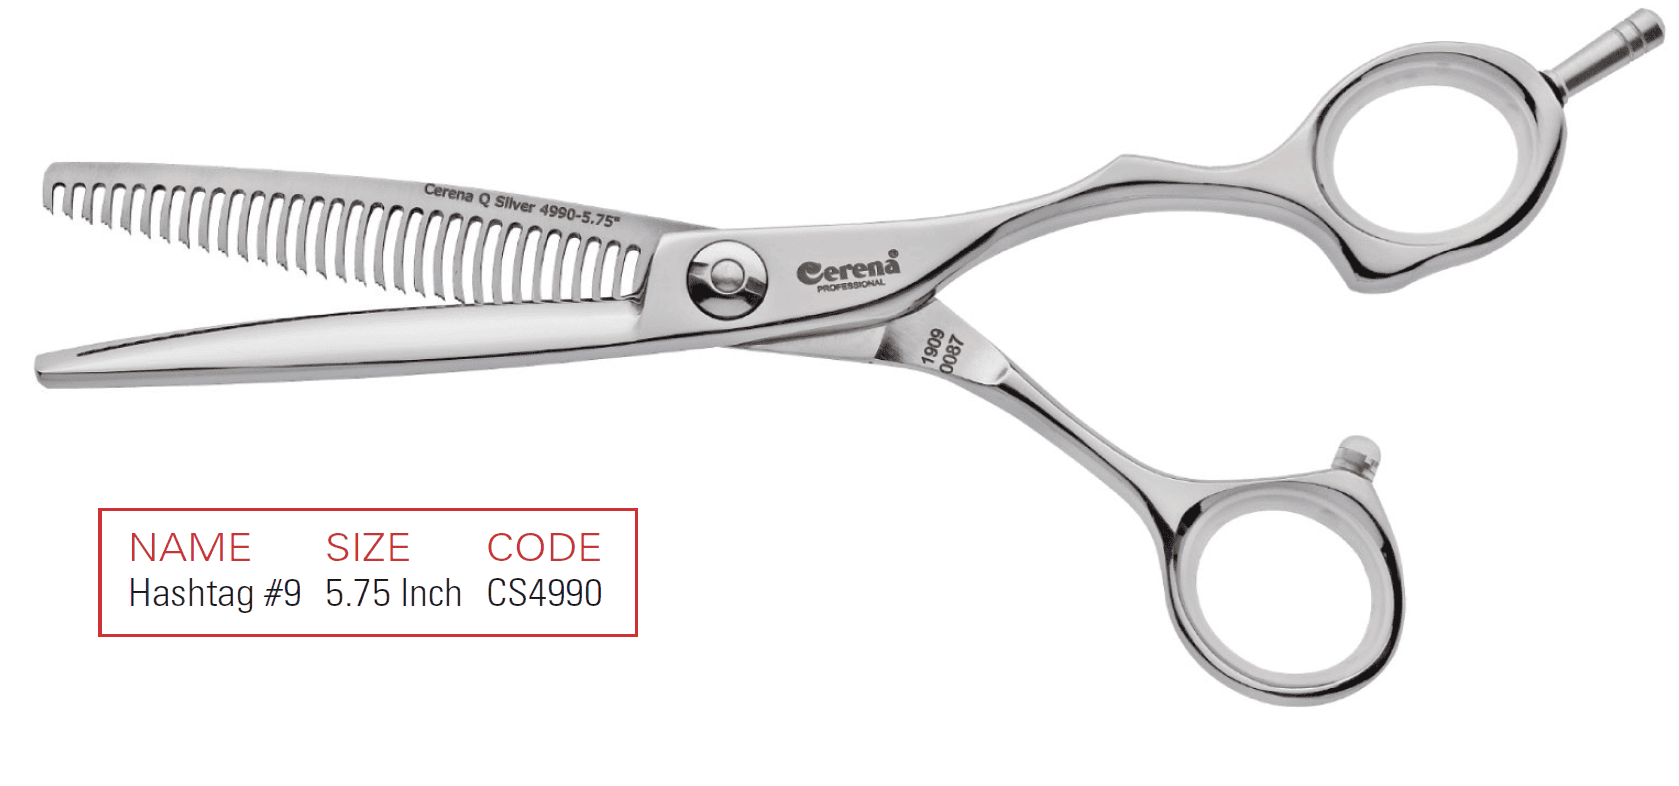 Cerena Hashtag No9 - 4990 - 5.75 Inch Thinning Scissors